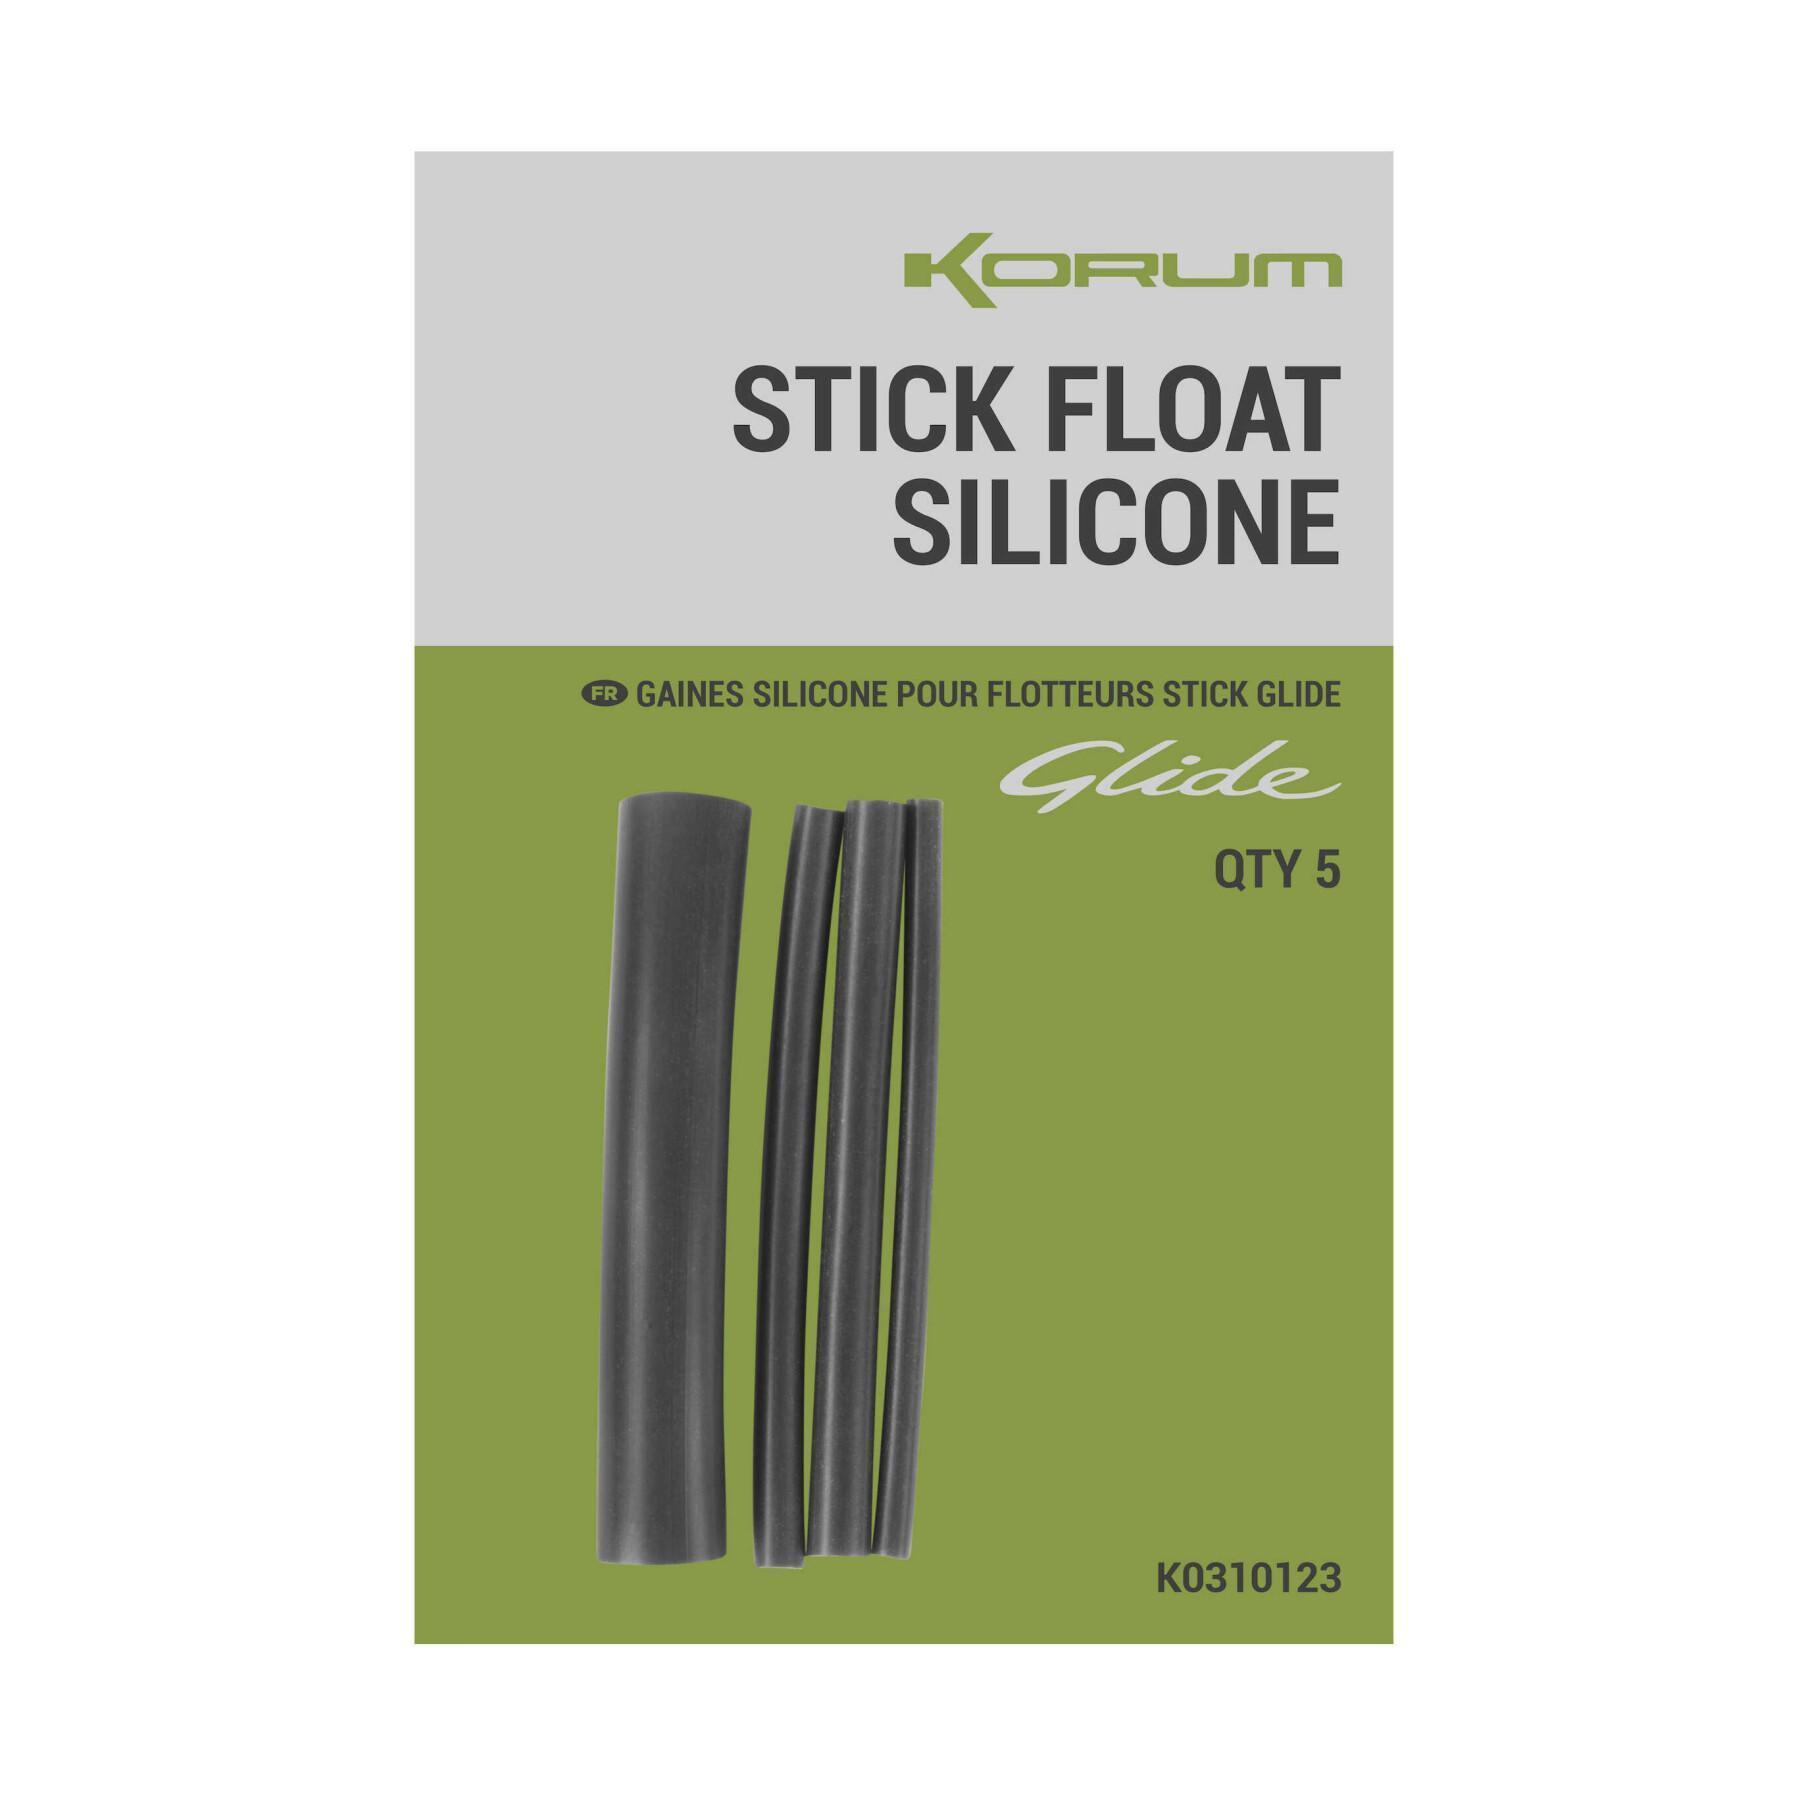 Flotteurs coup silicone Korum Glide - Stick 5x5